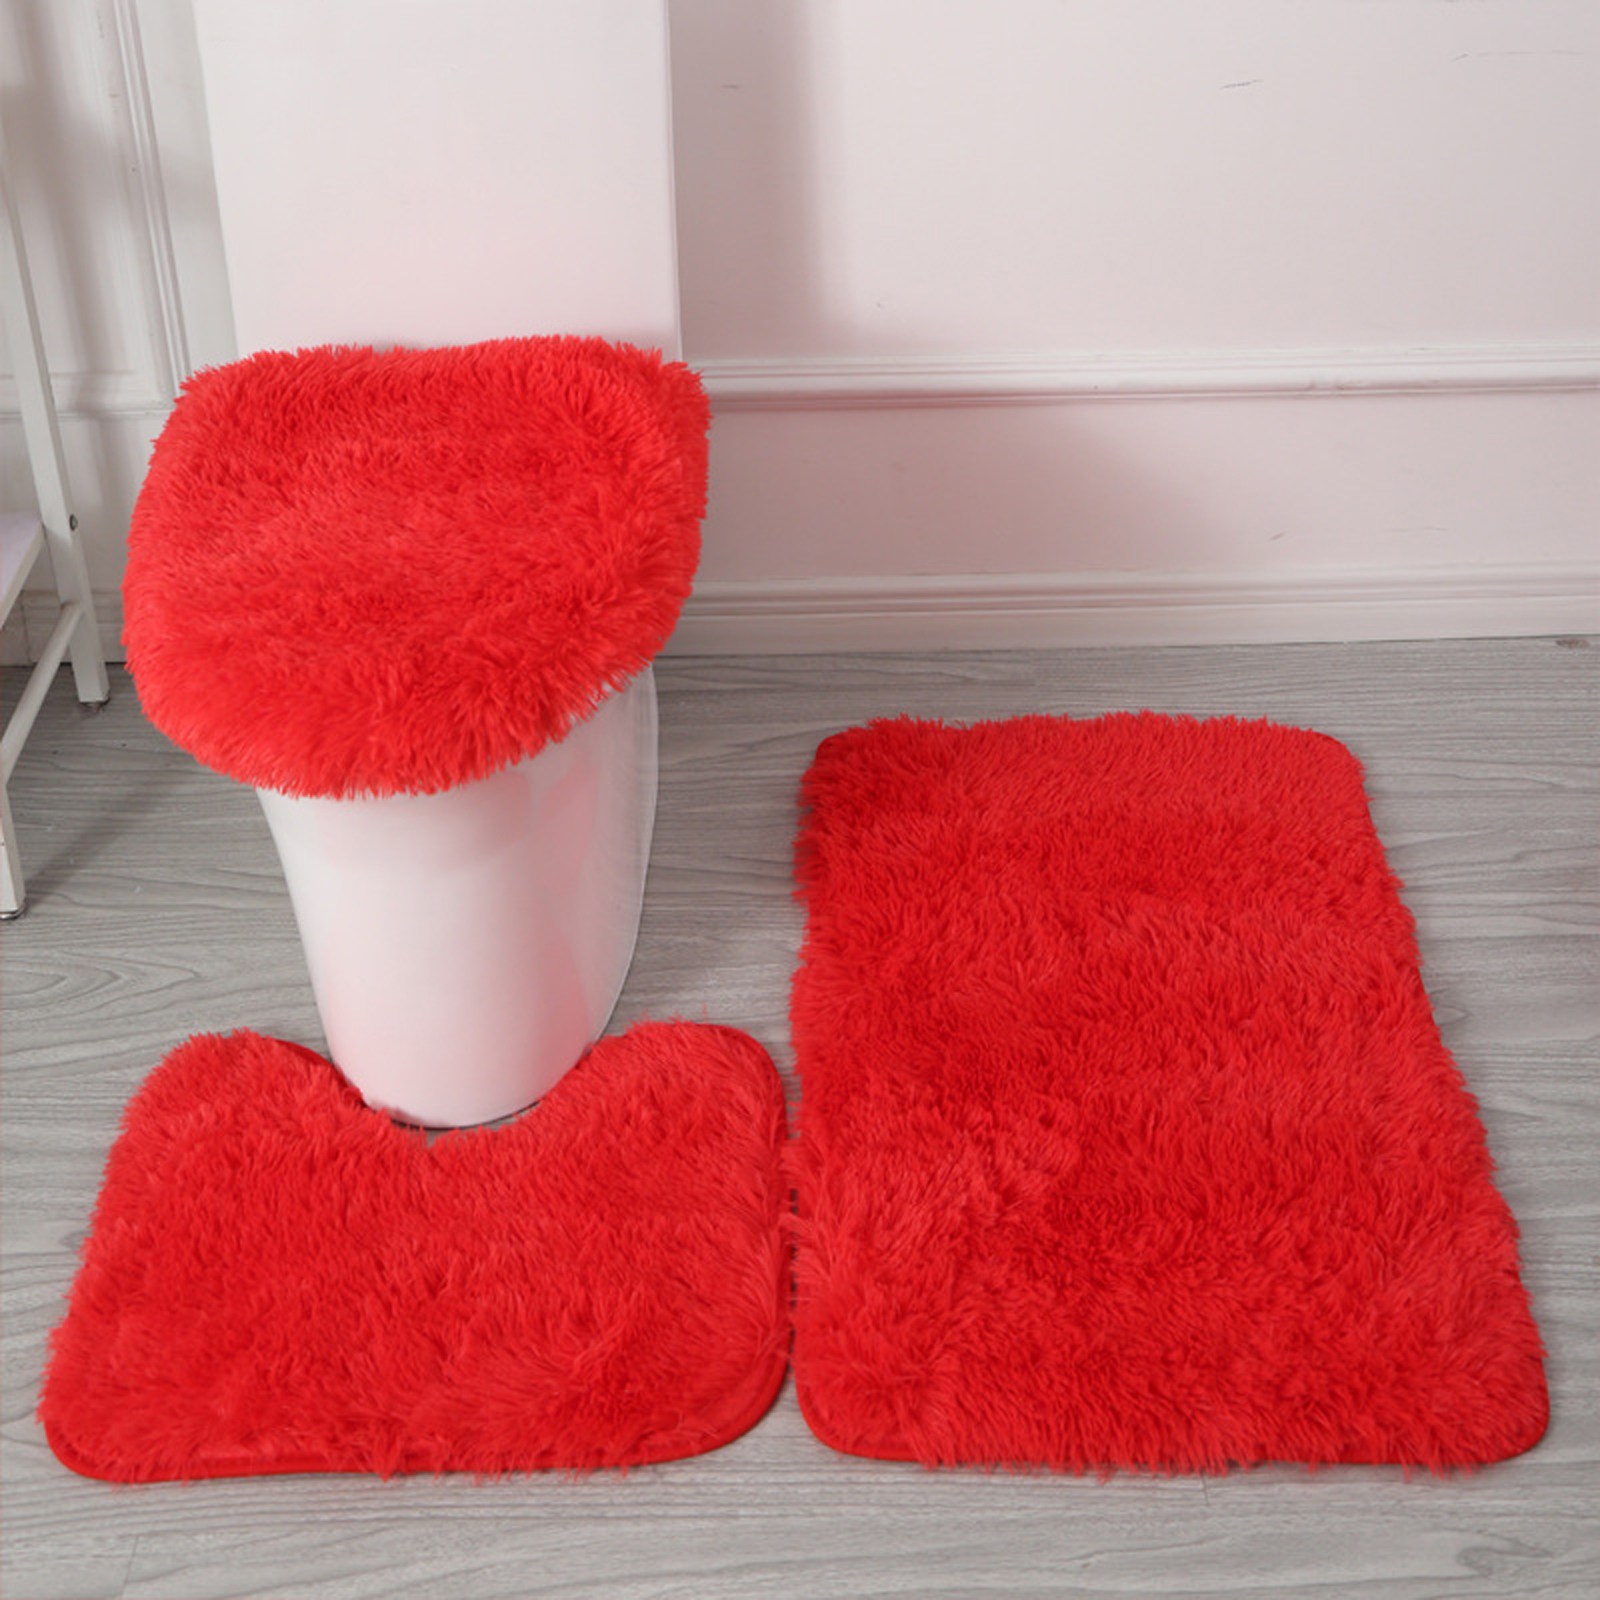 3 Pcs/Set Bathroom Rug Set Contour Bath Rug Toilet Lid Cover - Red - image 1 of 5